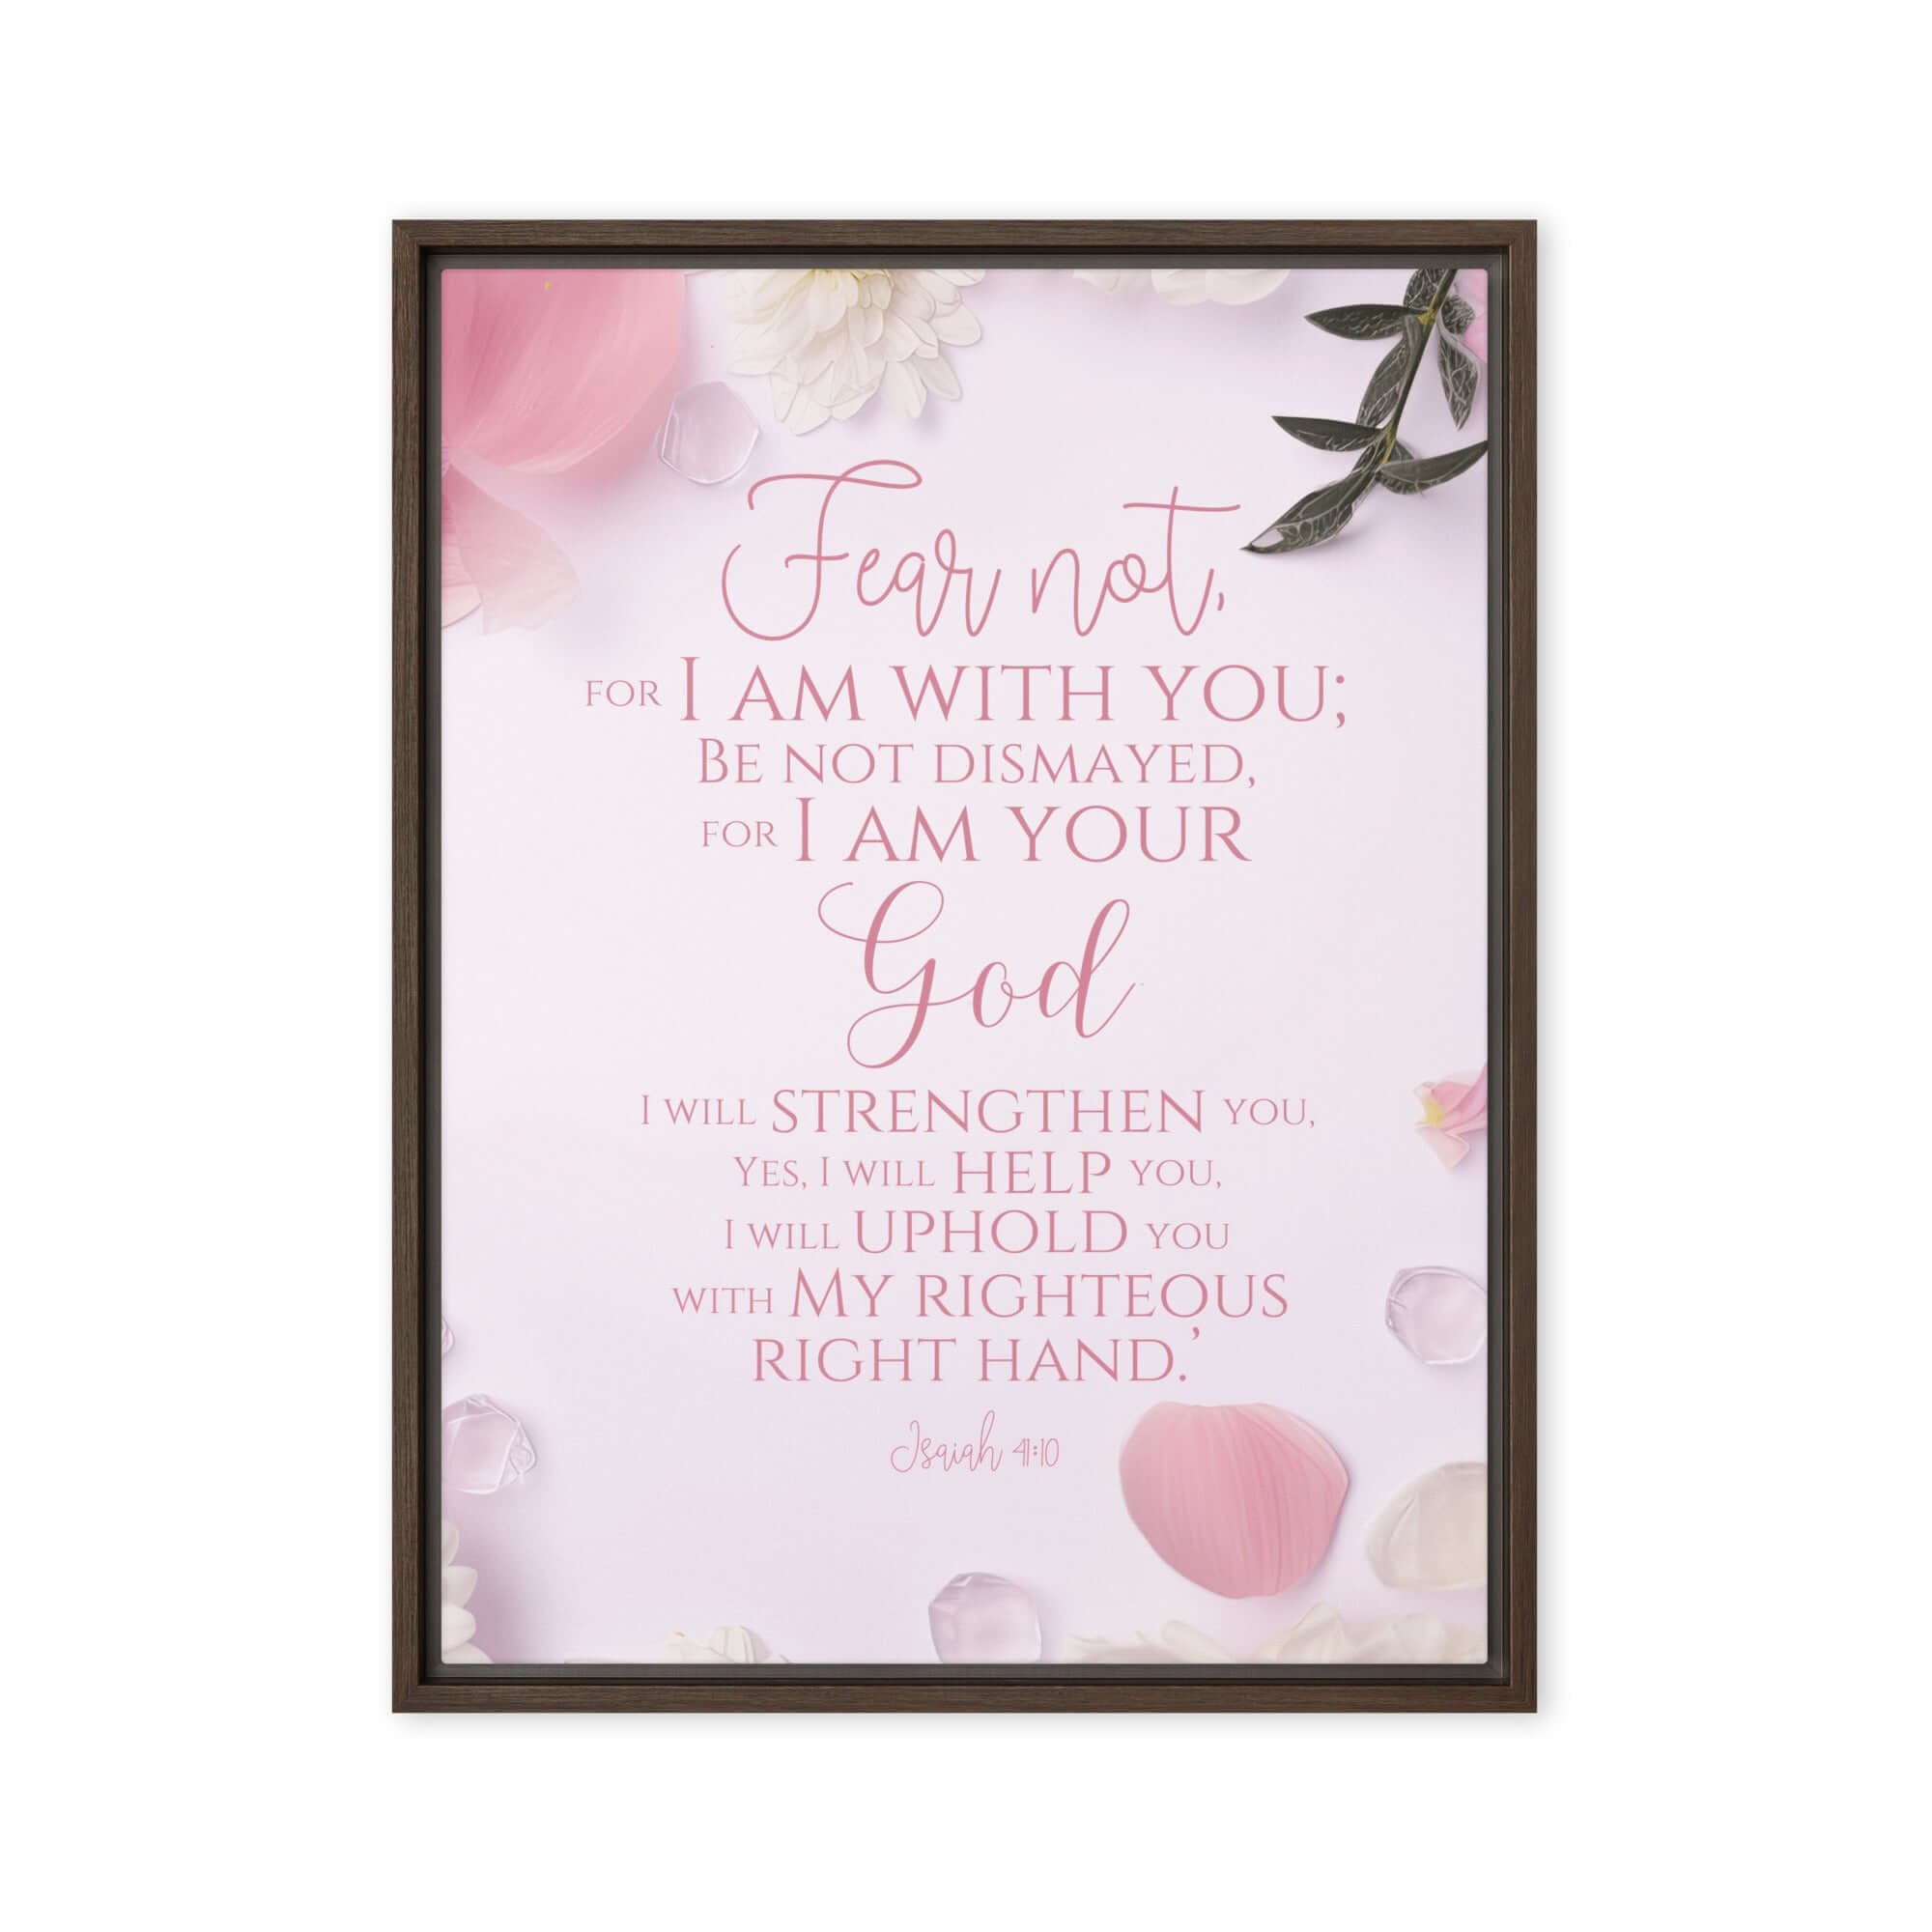 Isaiah 41:10 - Bible Verse, God will strengthen you Framed Canvas